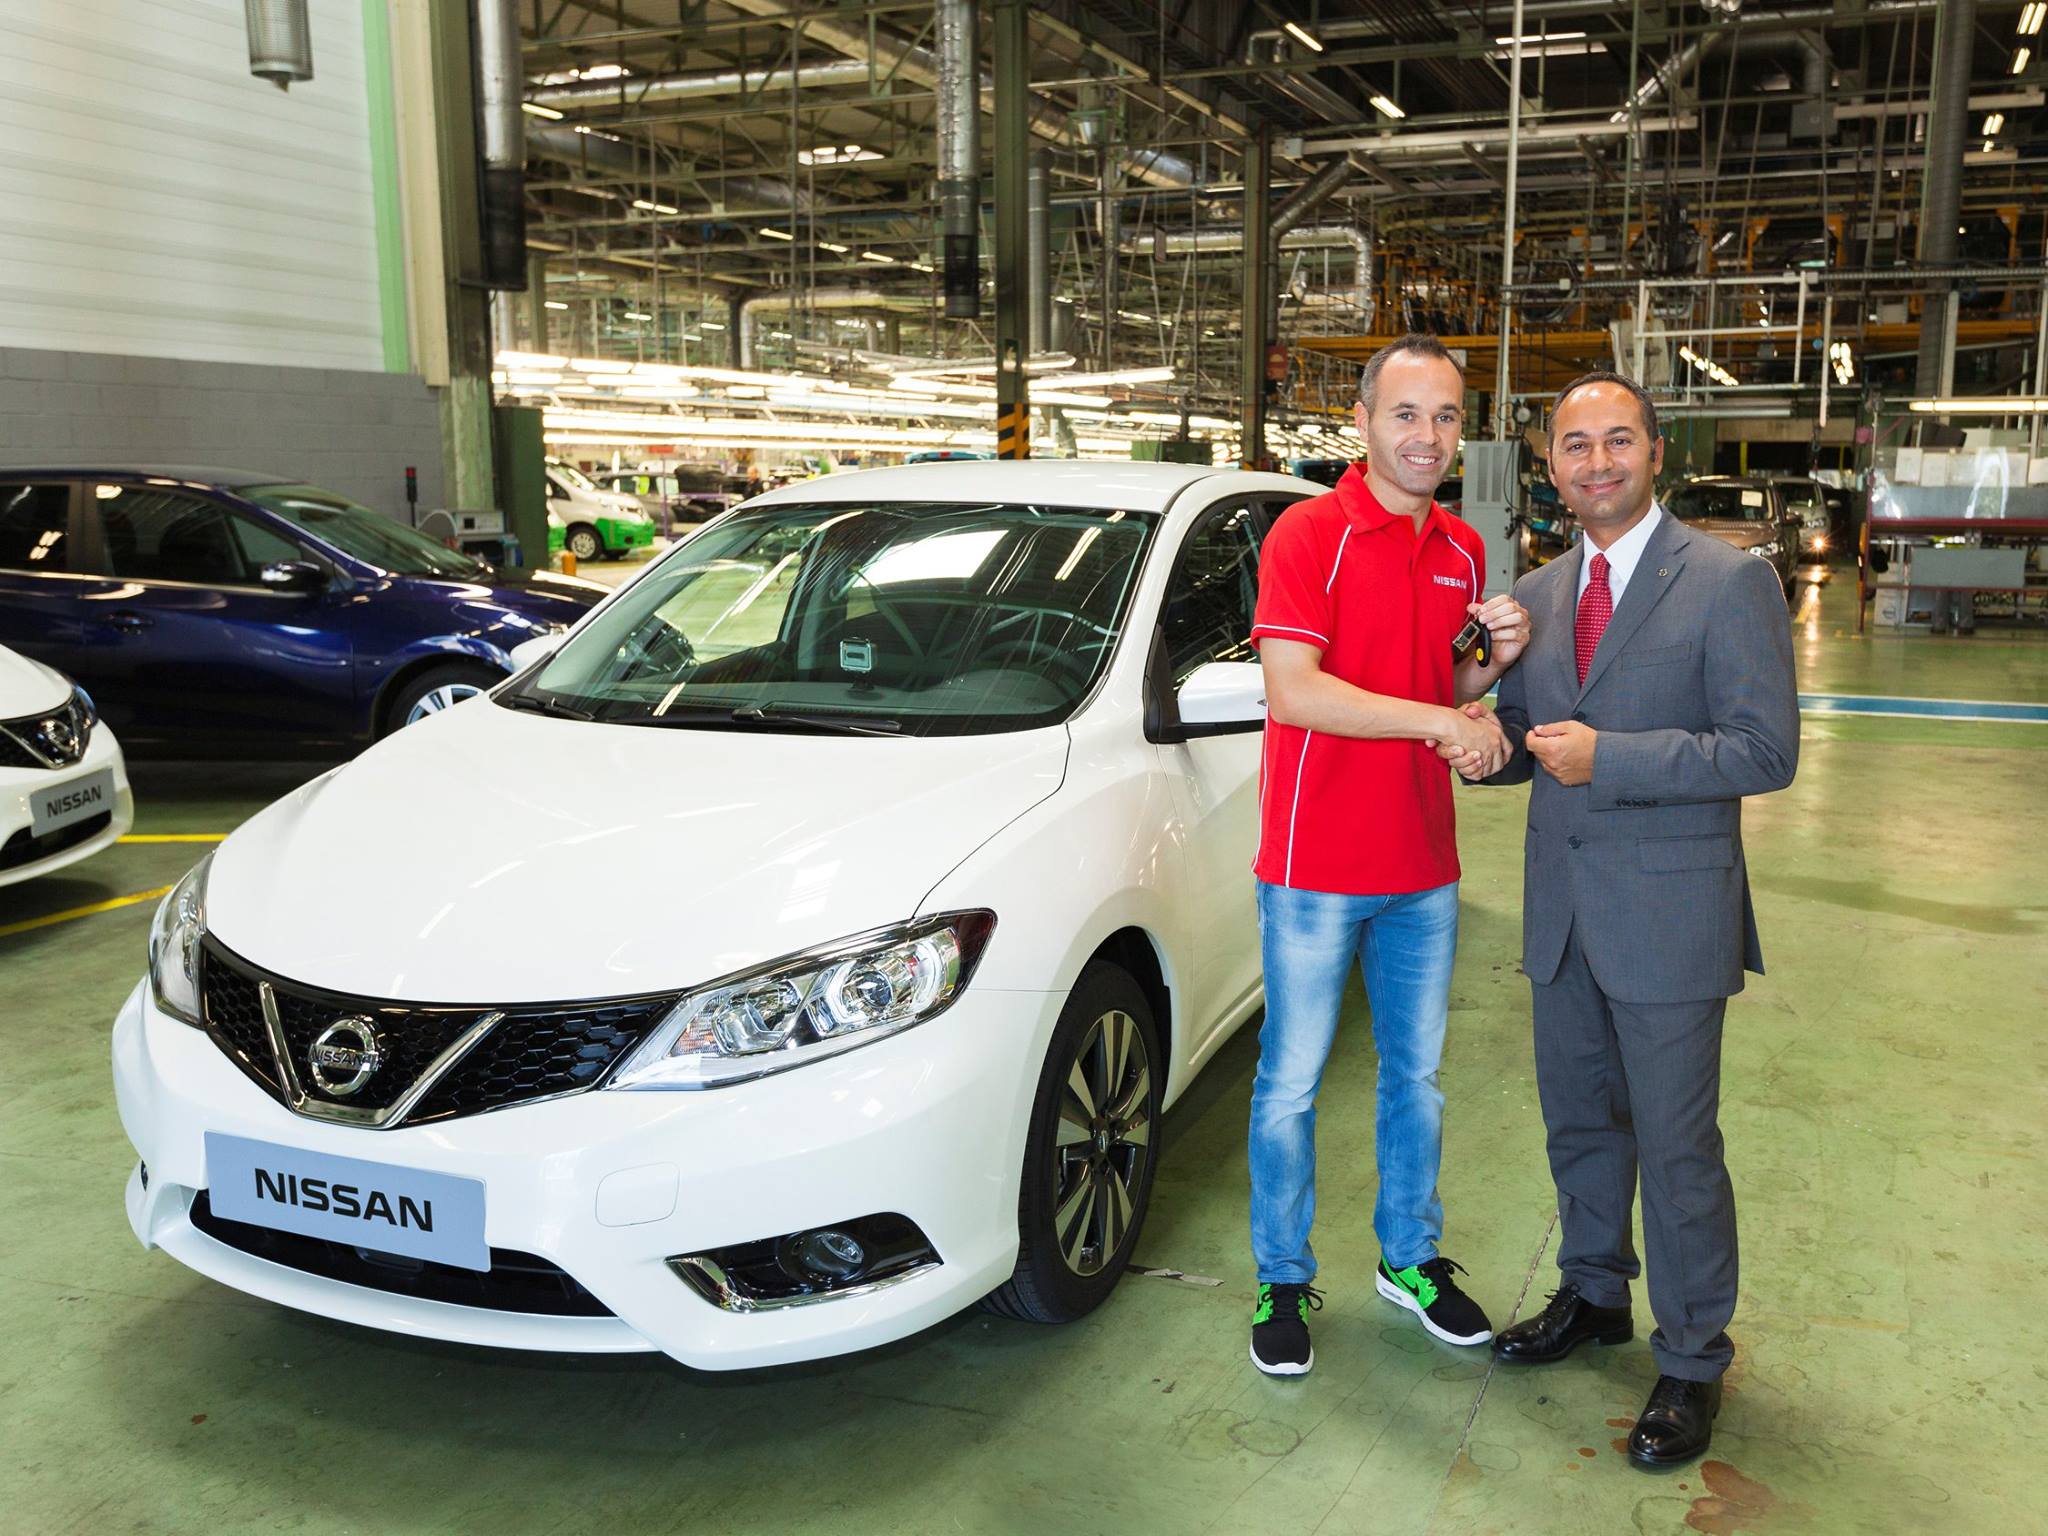 Andres Iniesta Brand Endorsements Brand Ambassador Sponsorship Partners Advertising TVC Spain Barcelona  Nissan